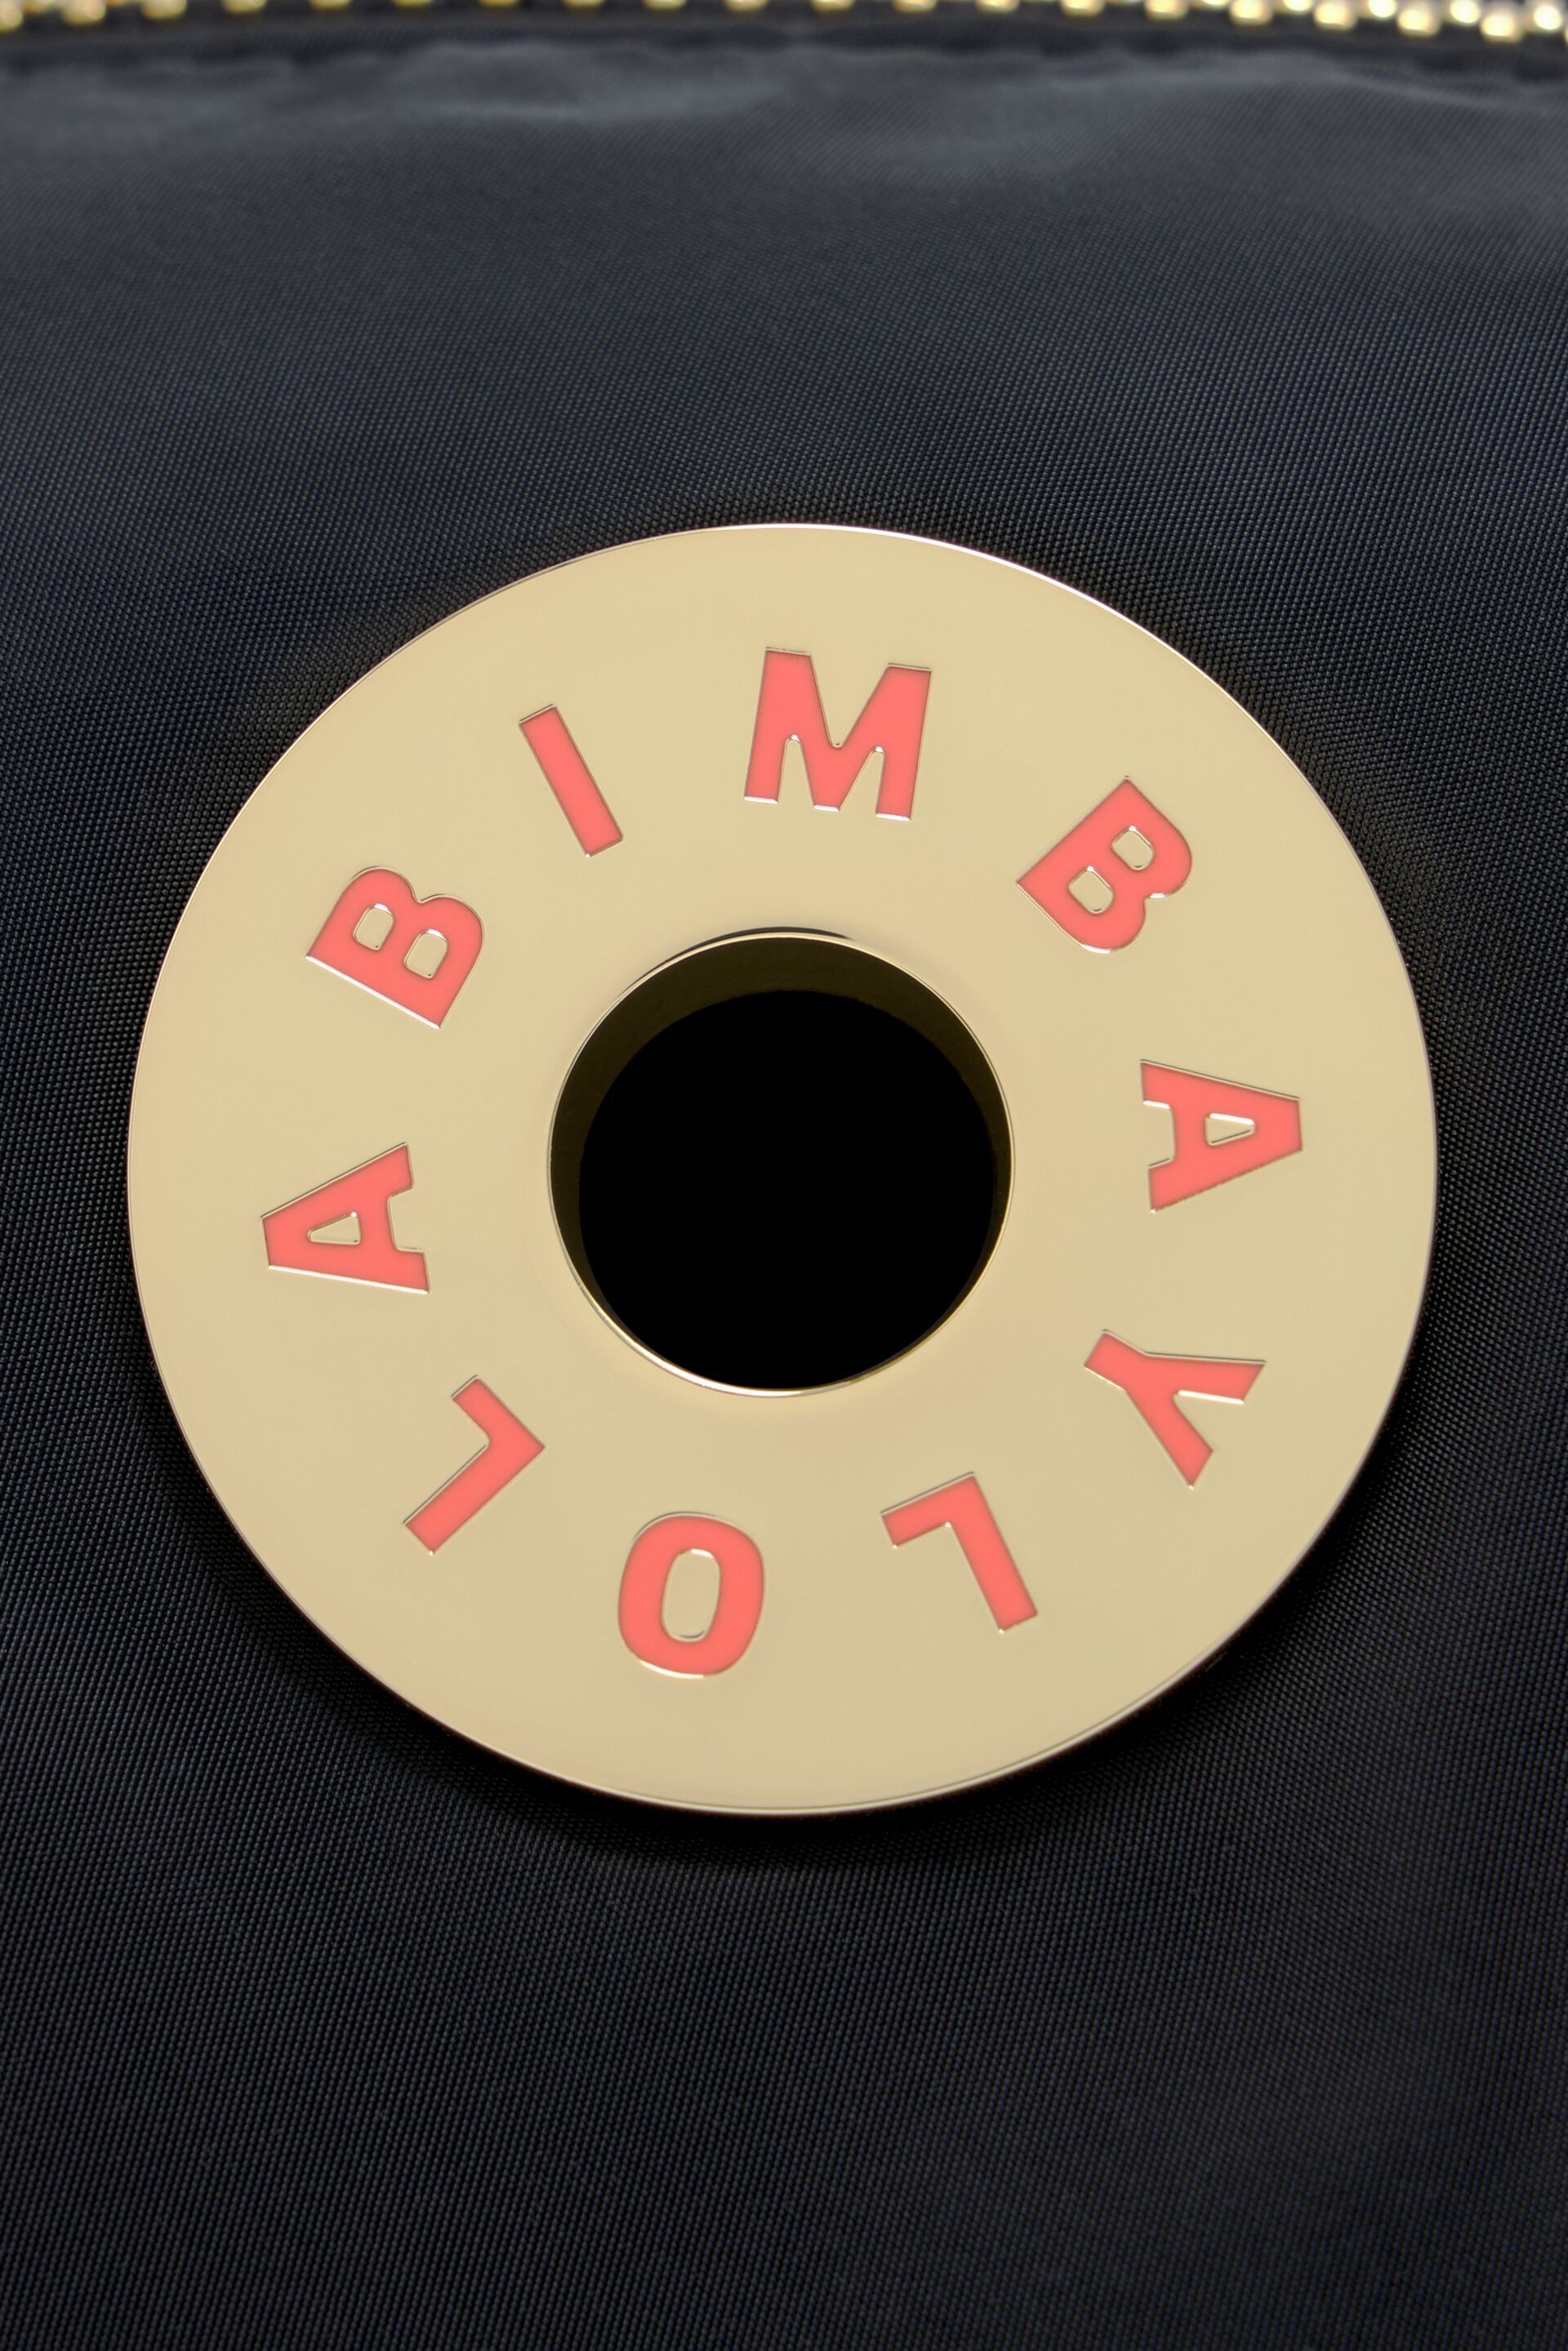 Crossbody bag Bimba y Lola Black in Polyamide - 36133243